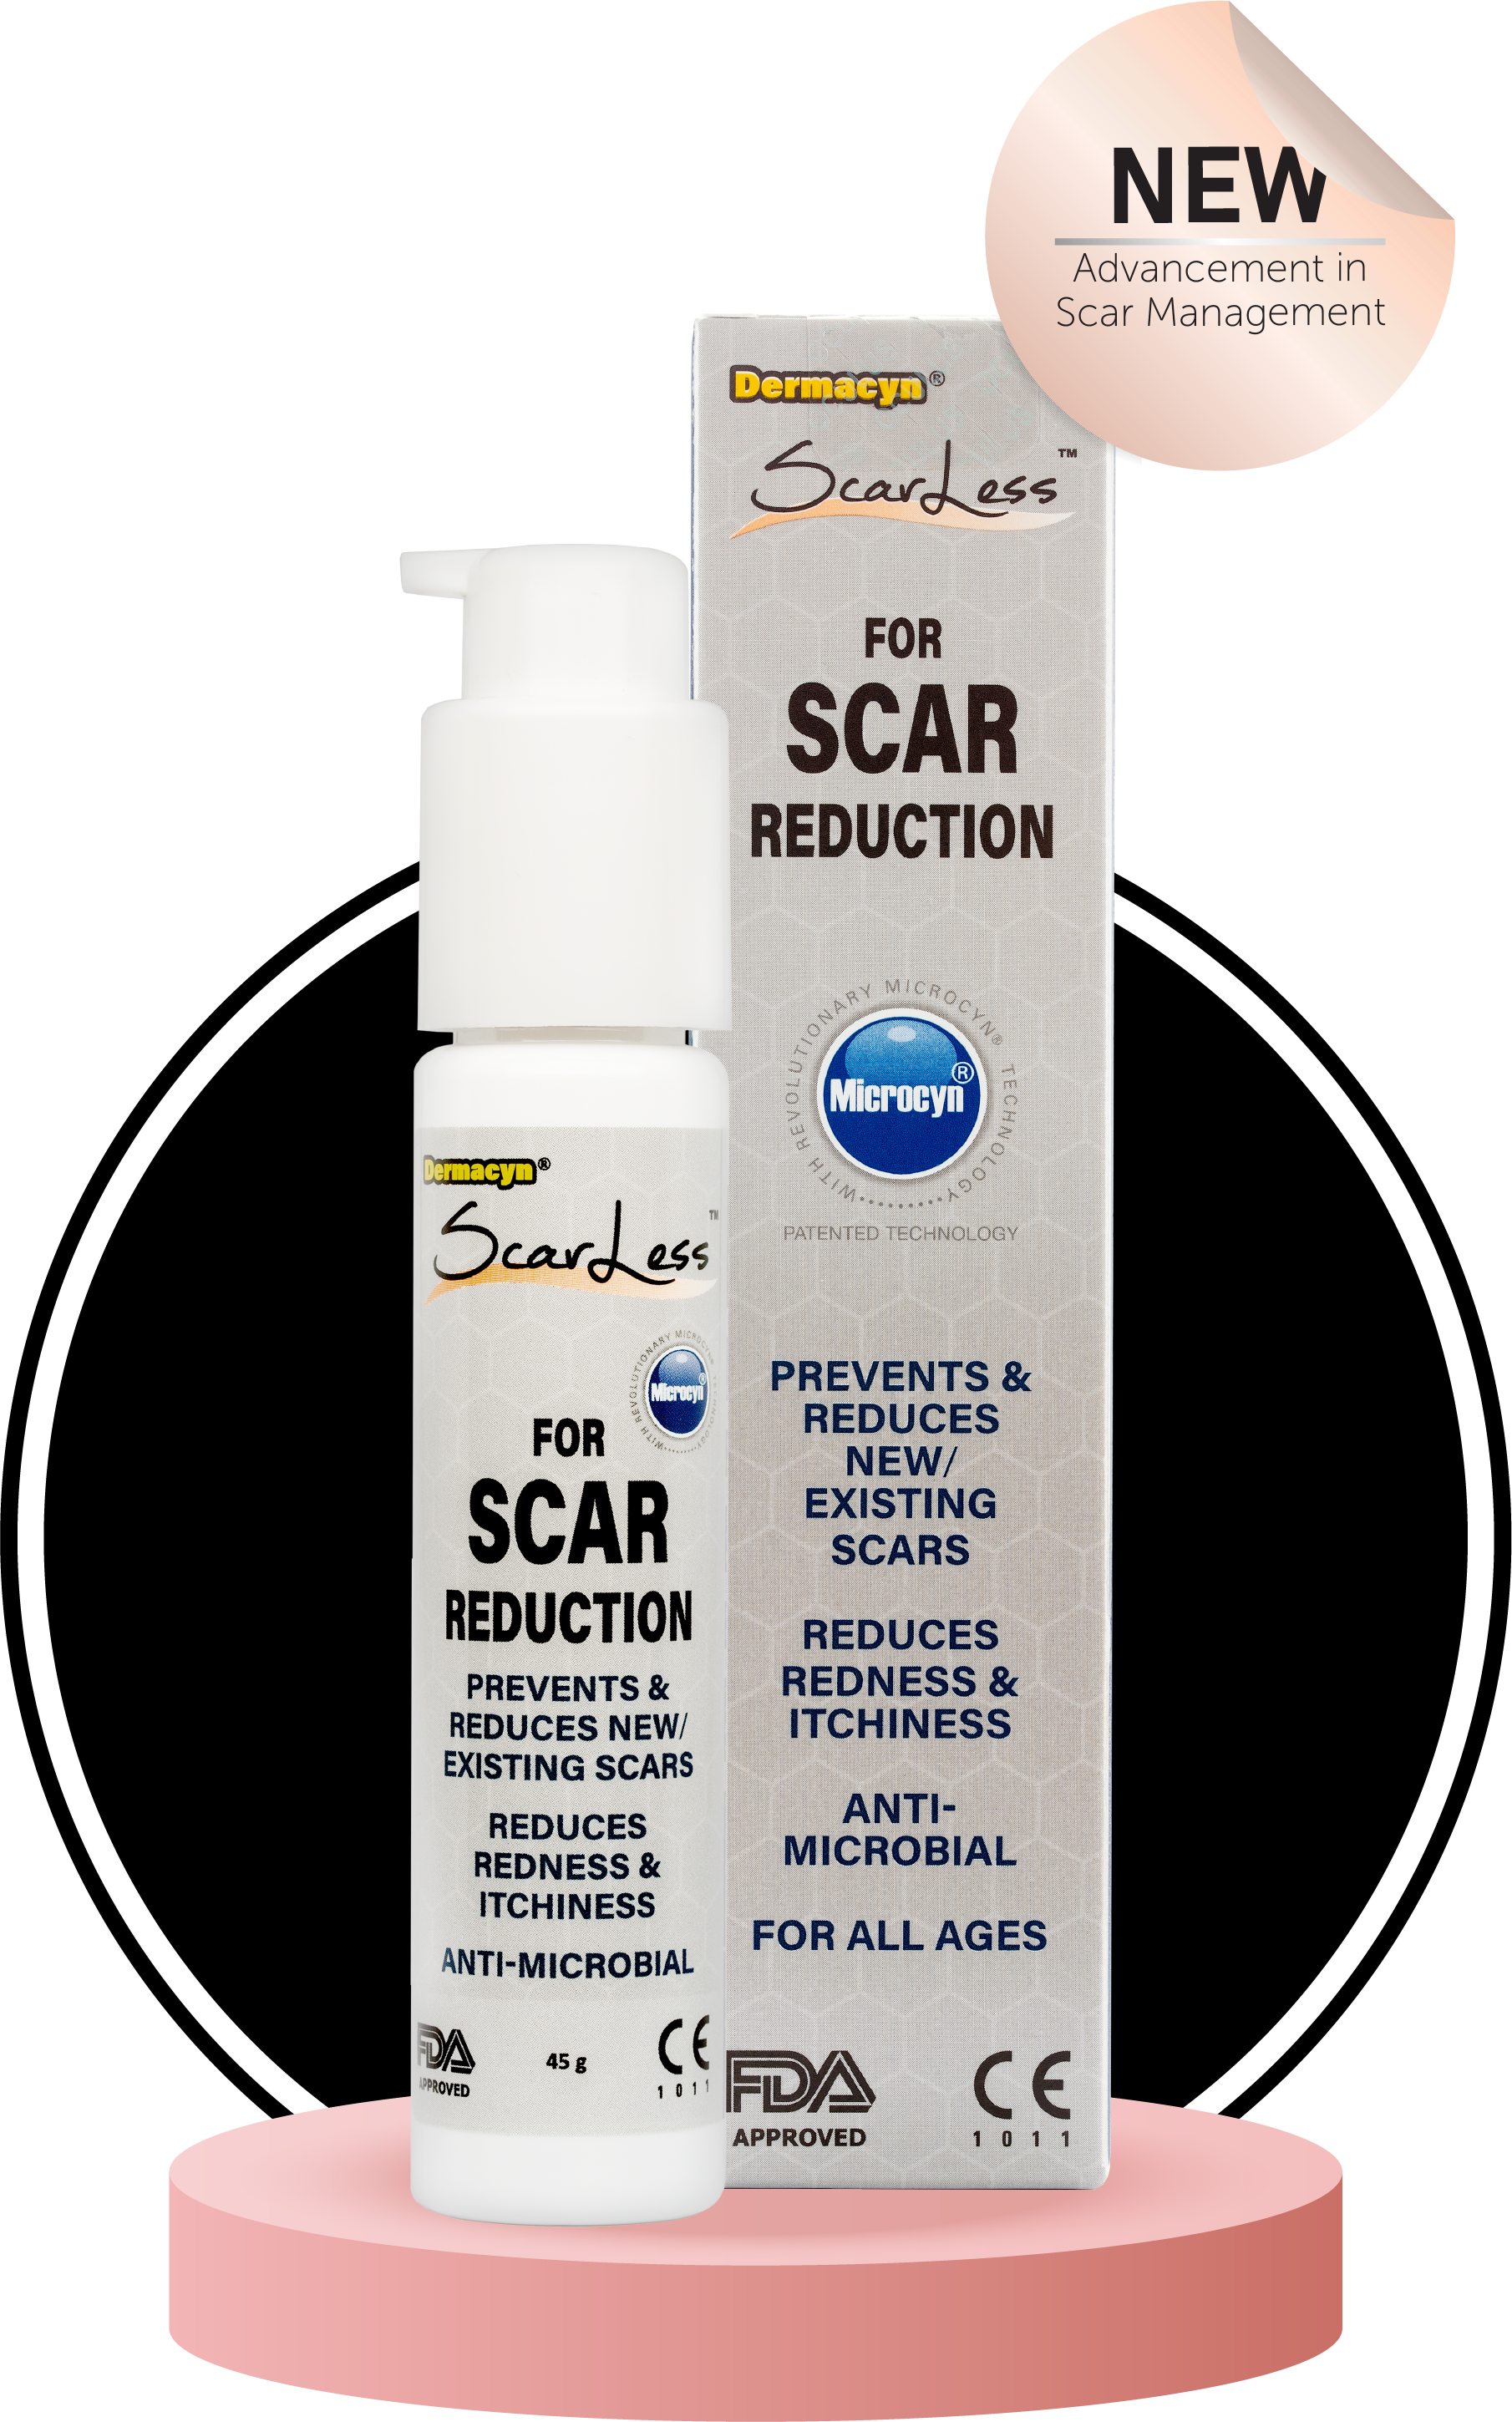 scar reduction gel scarless new advancement management